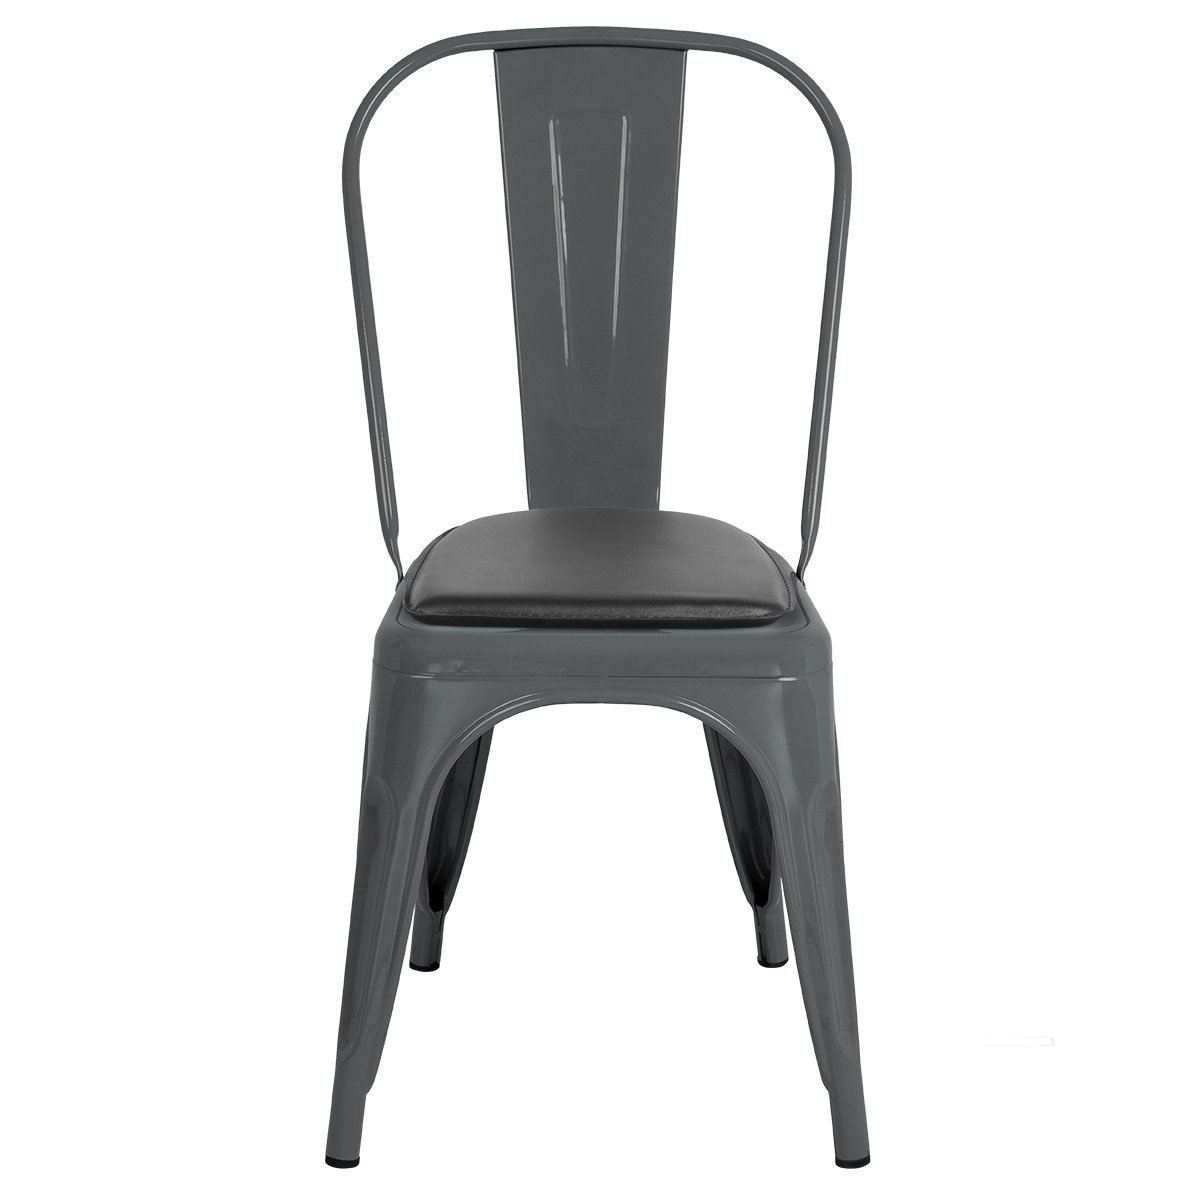 Cadeira Iron Tolix design industrial com almofada - 3